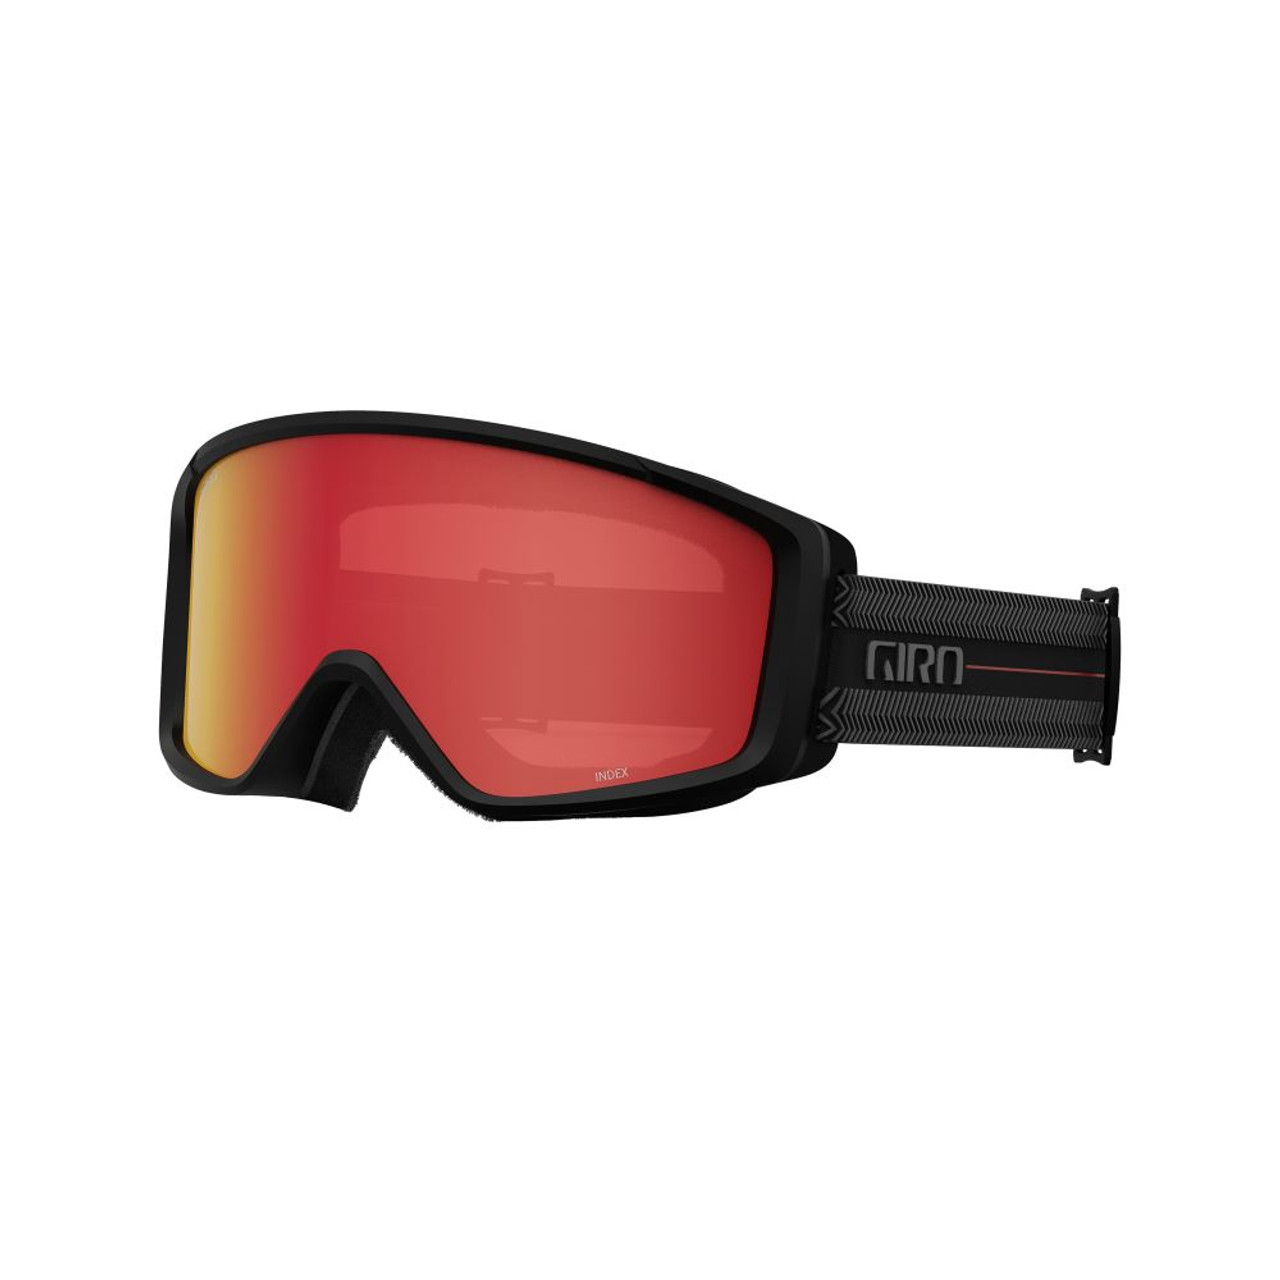 Lens for the Giro Index OTG 2.0 Ski Goggles